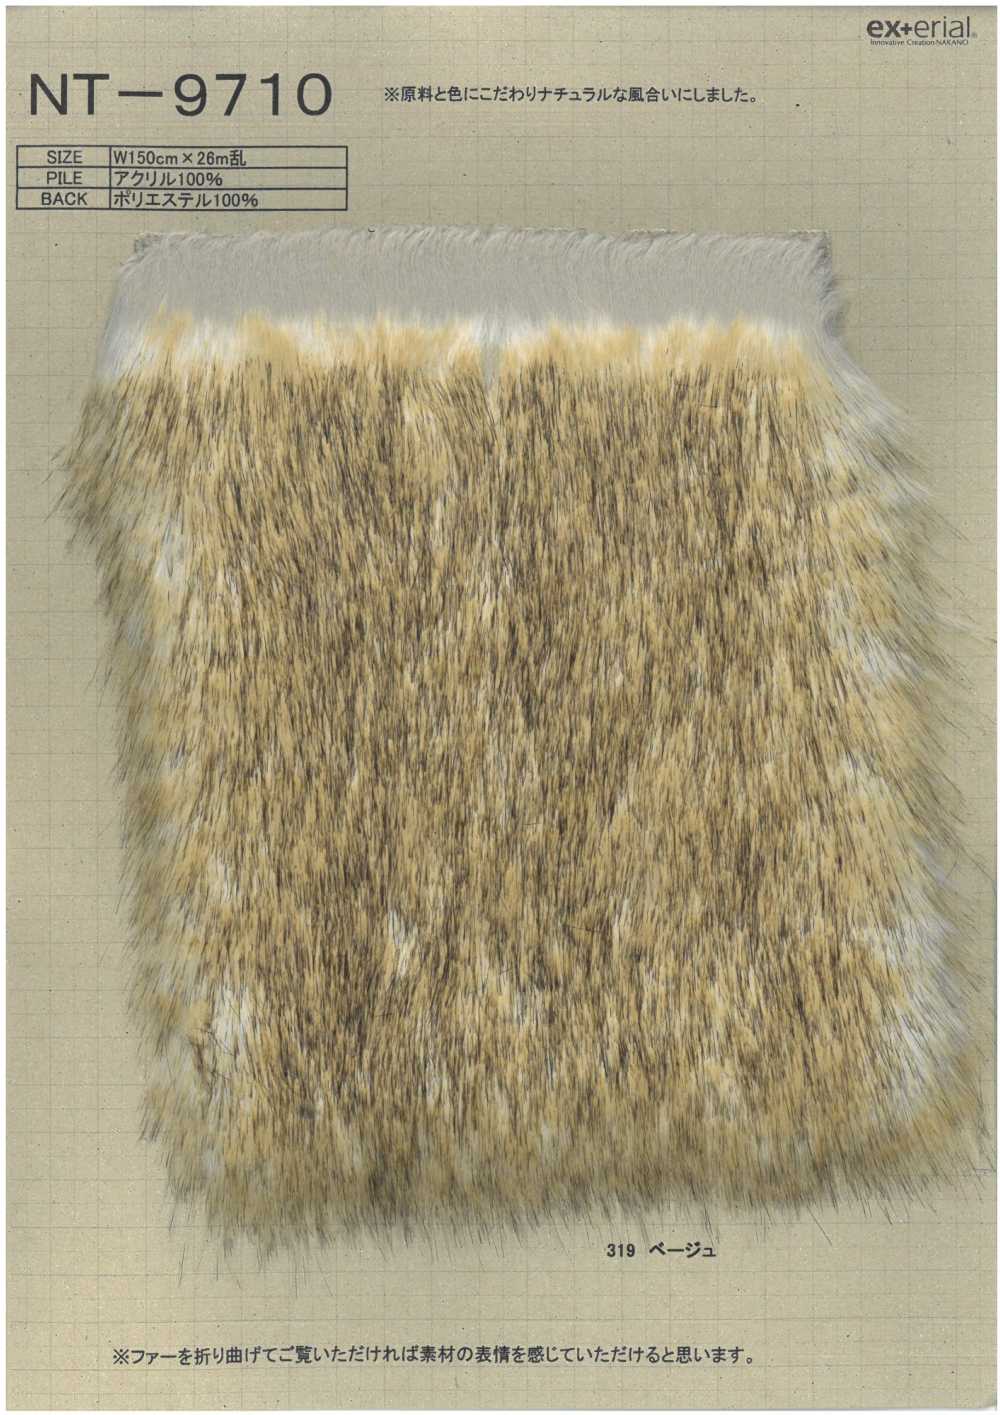 NT-9710 Pele Artesanal [Fuzzy Lop][Têxtil / Tecido] Indústria De Meias Nakano